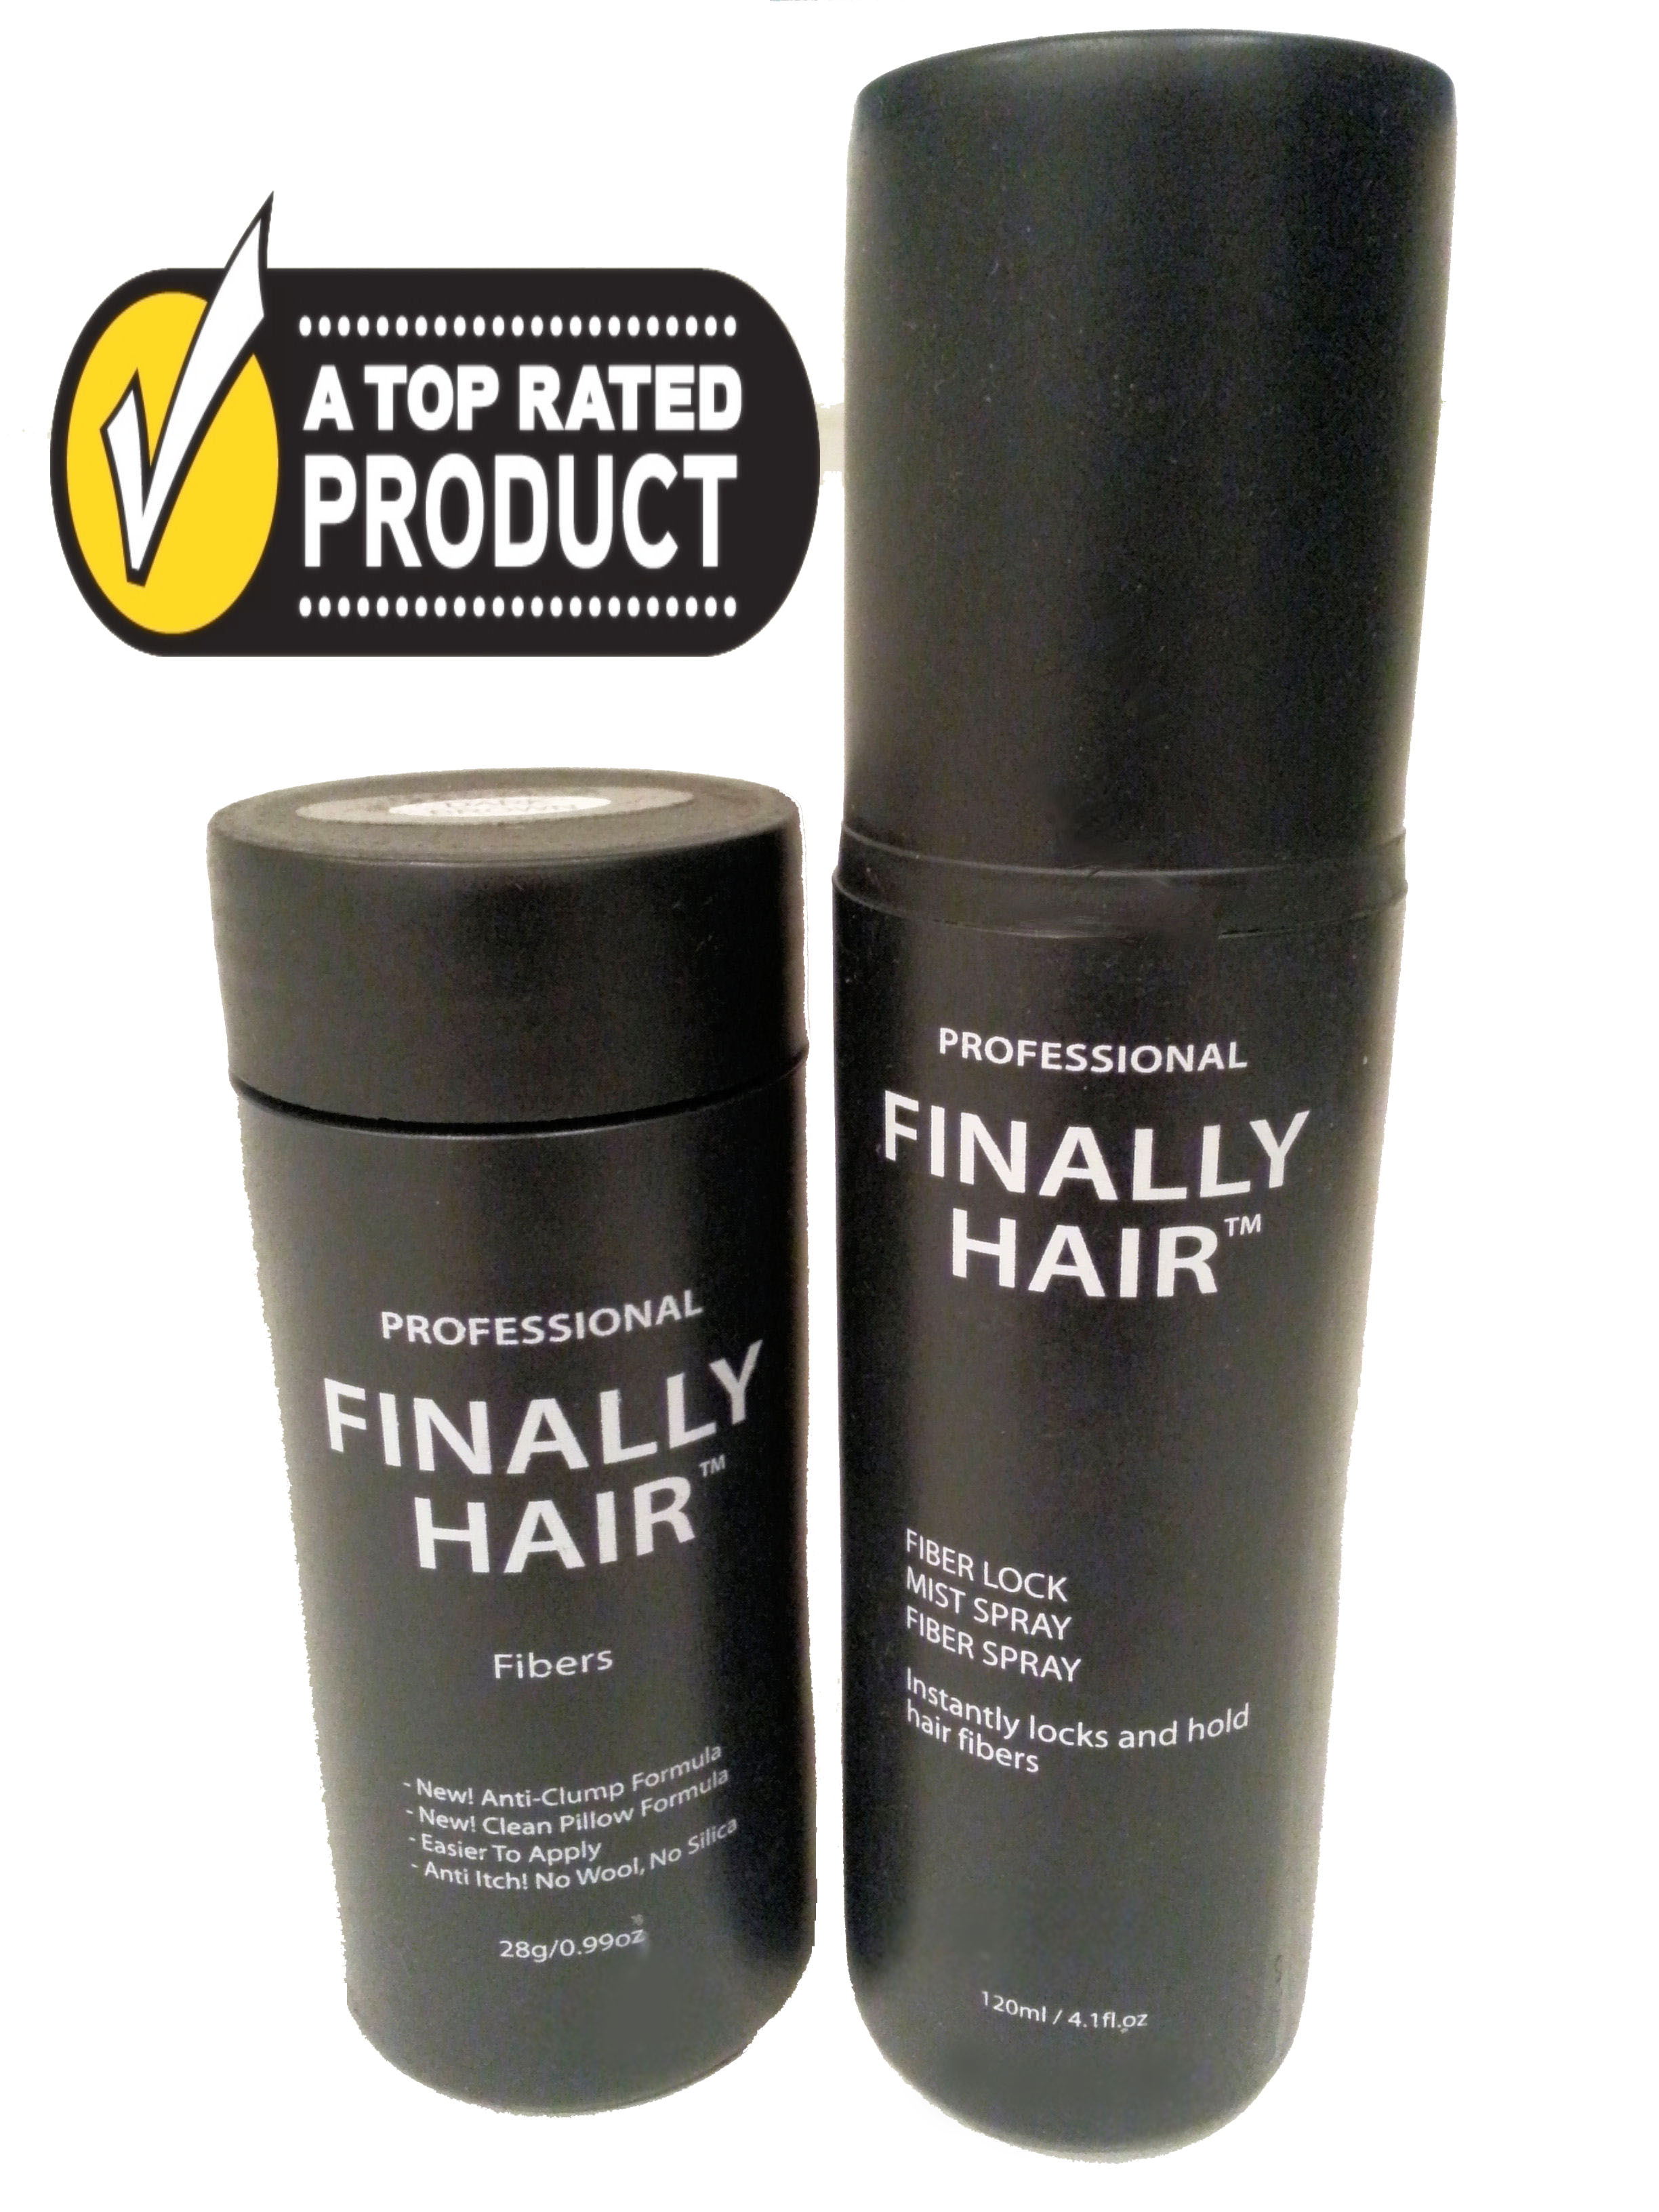 Hair Loss Concealer Kit - 28g Hair Fibers & Fiber Lock Spray